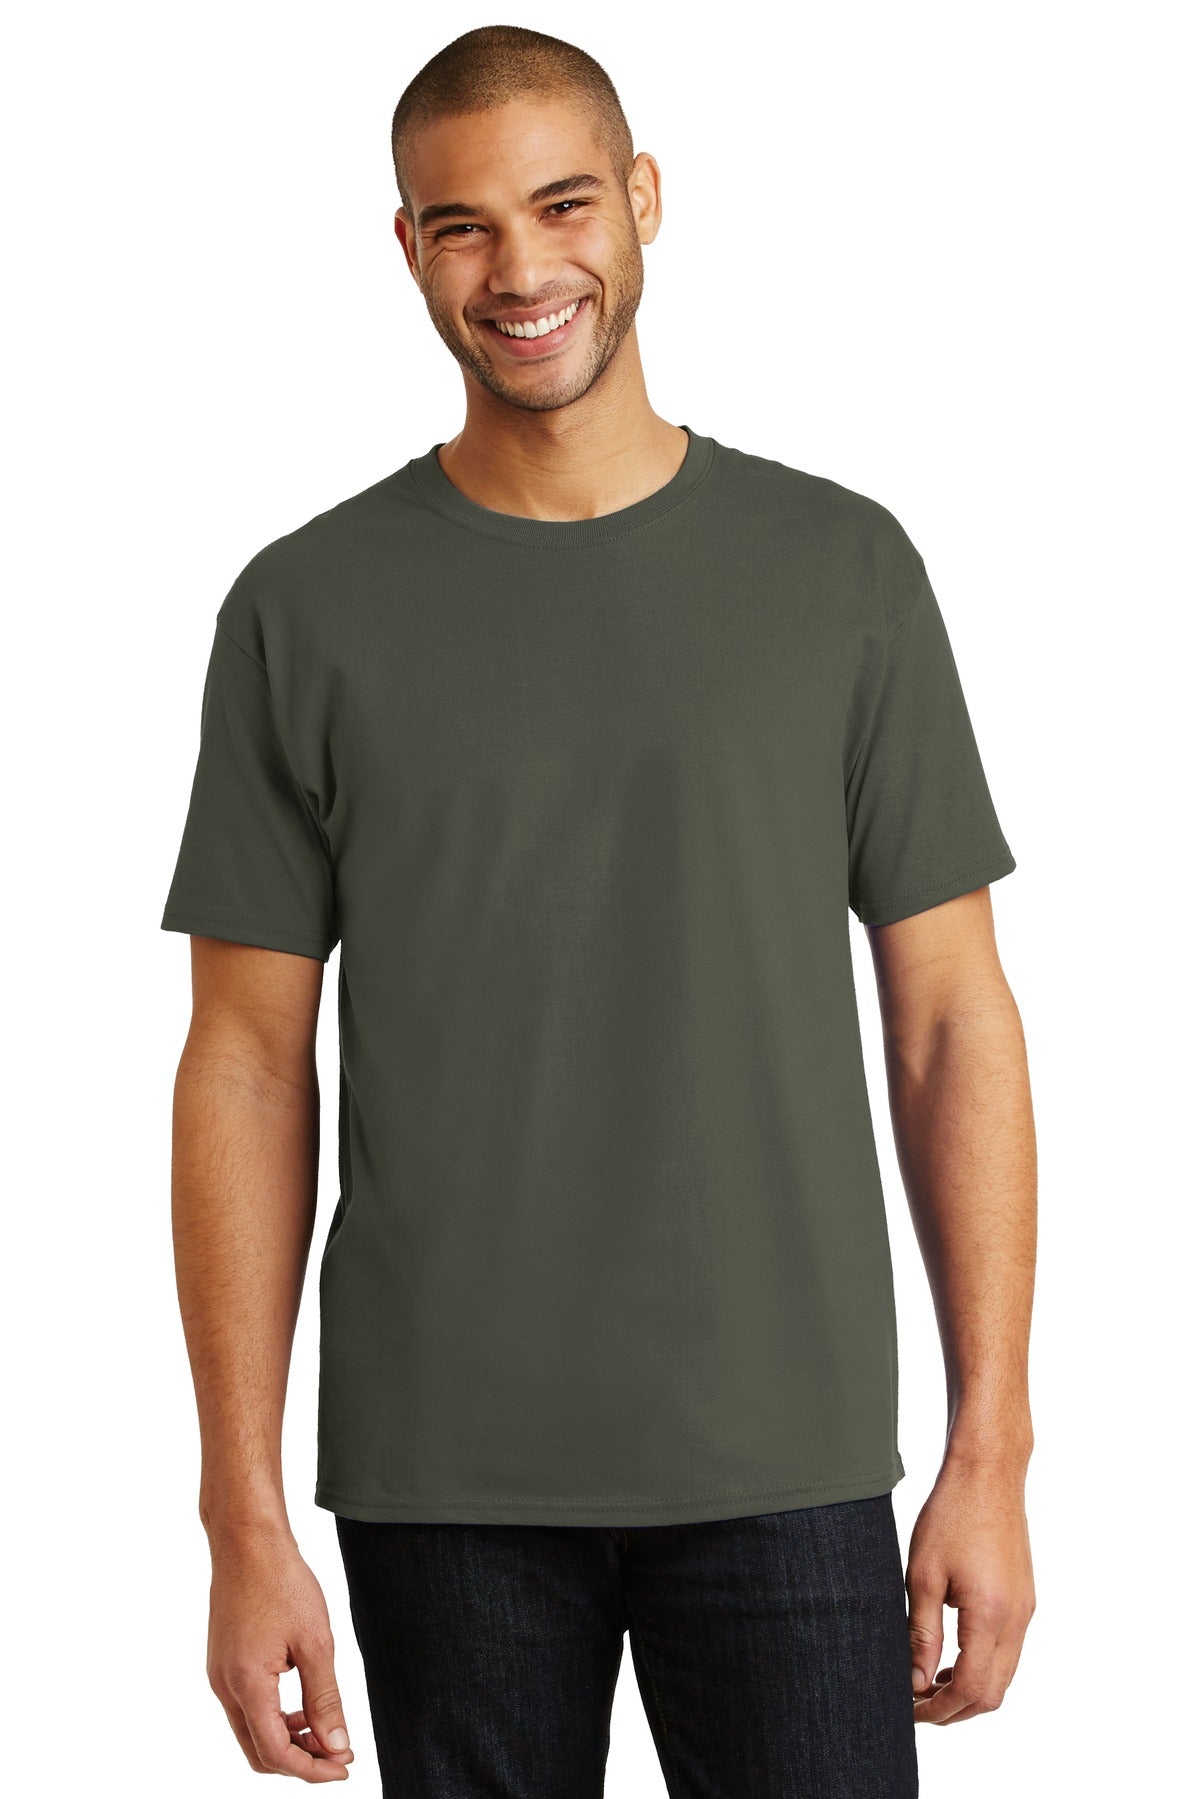 T-Shirts Fatigue Green Hanes